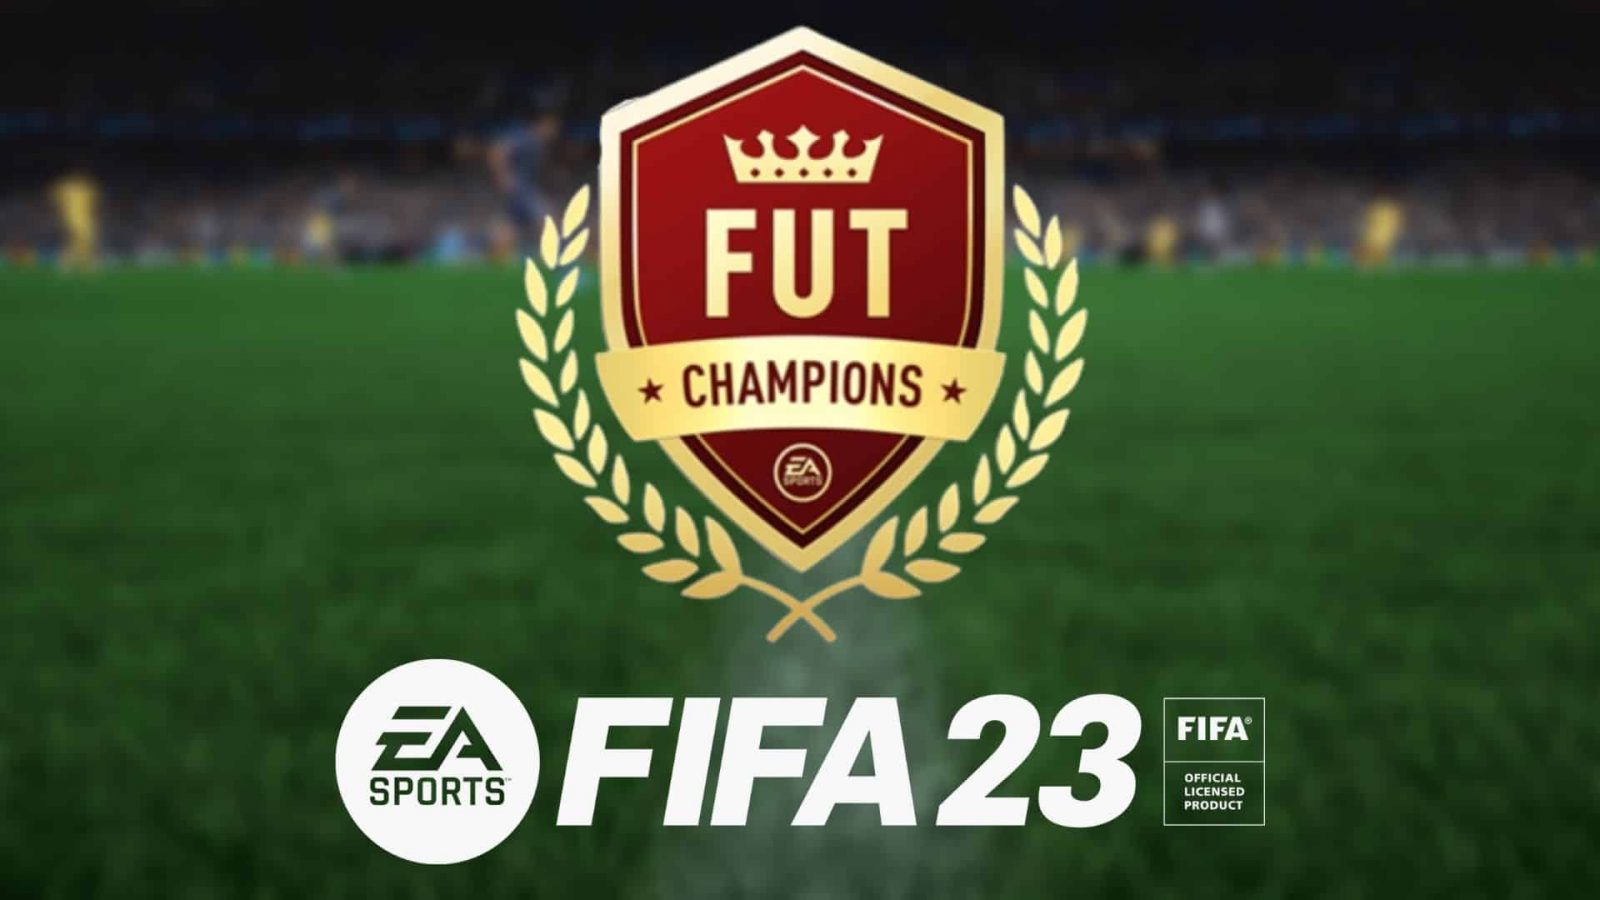 FUT Champs ve FIFA 23 Logo